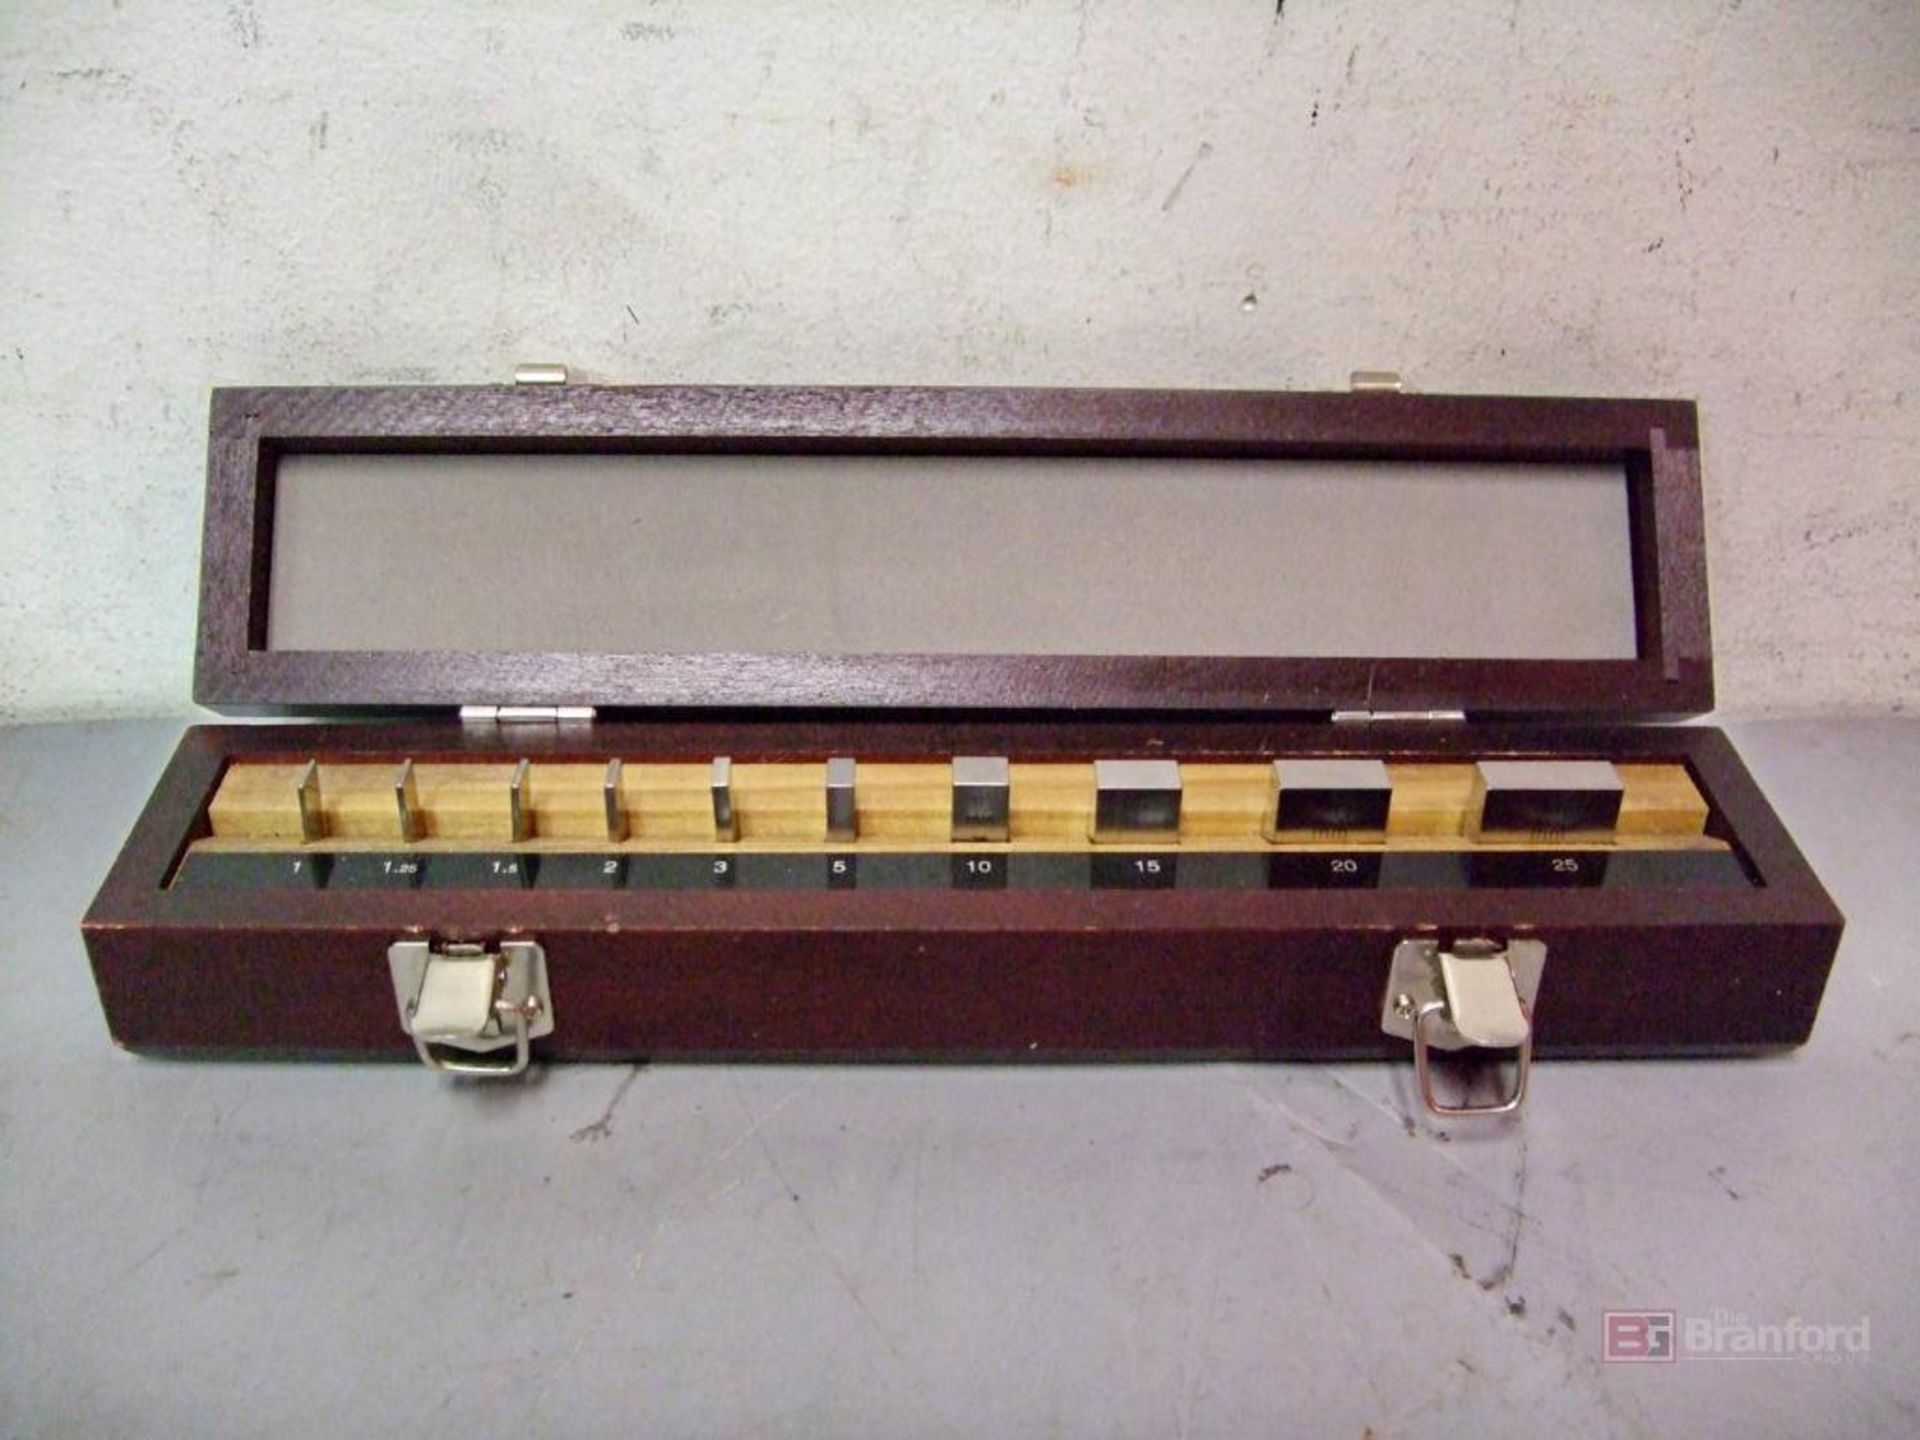 Mitutoyo 516-101-26 Rectangular Micrometer Inspection Gauge Block Set - Image 2 of 3